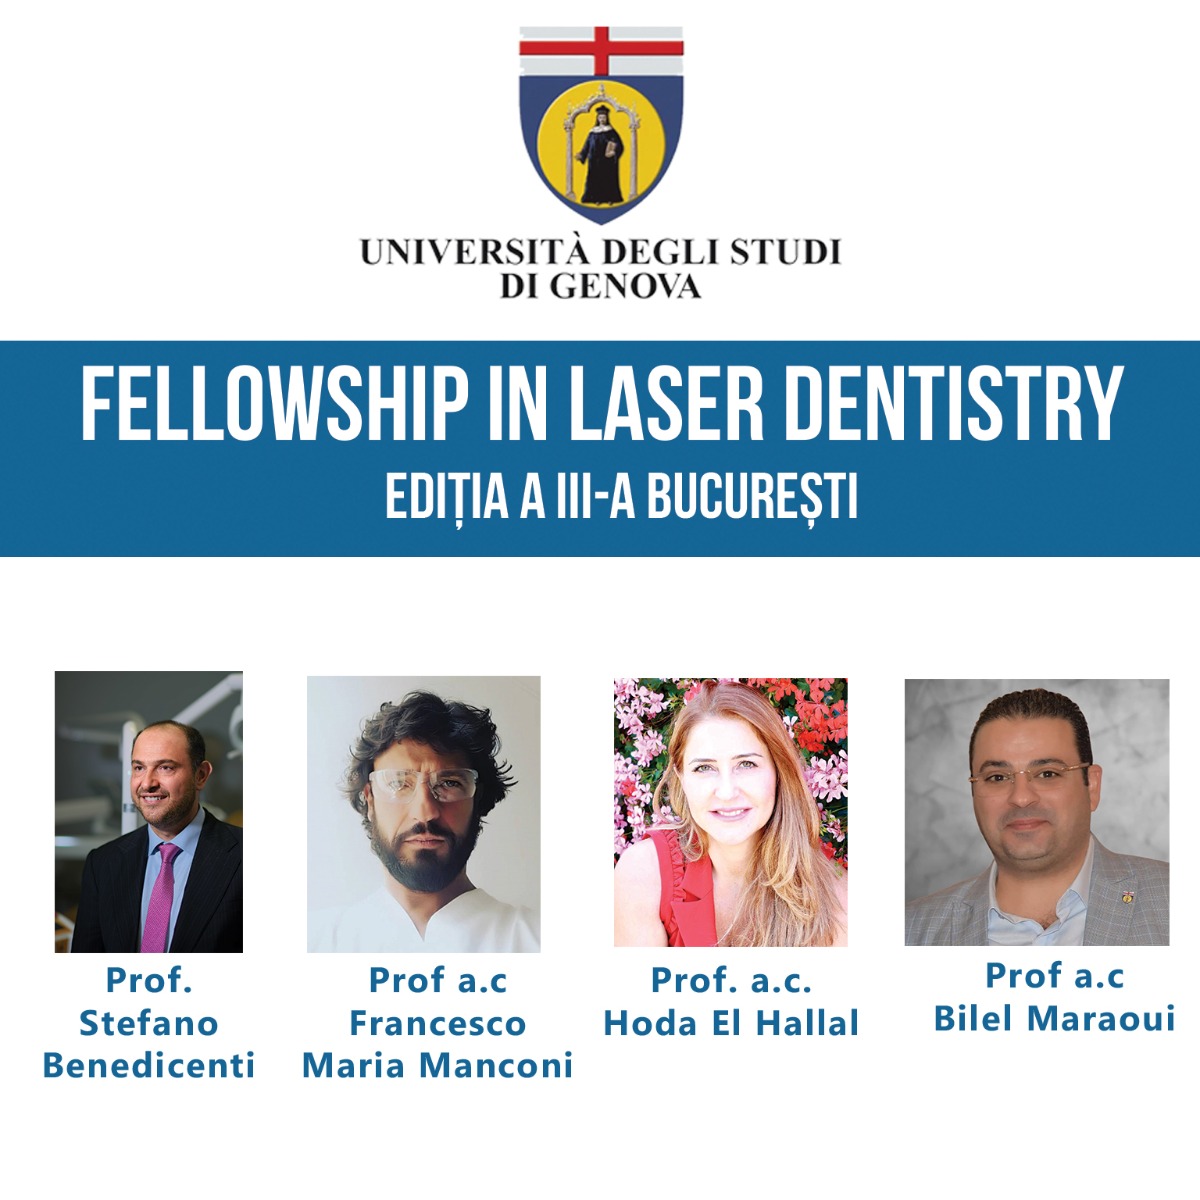 Fellowship in laser dentistry